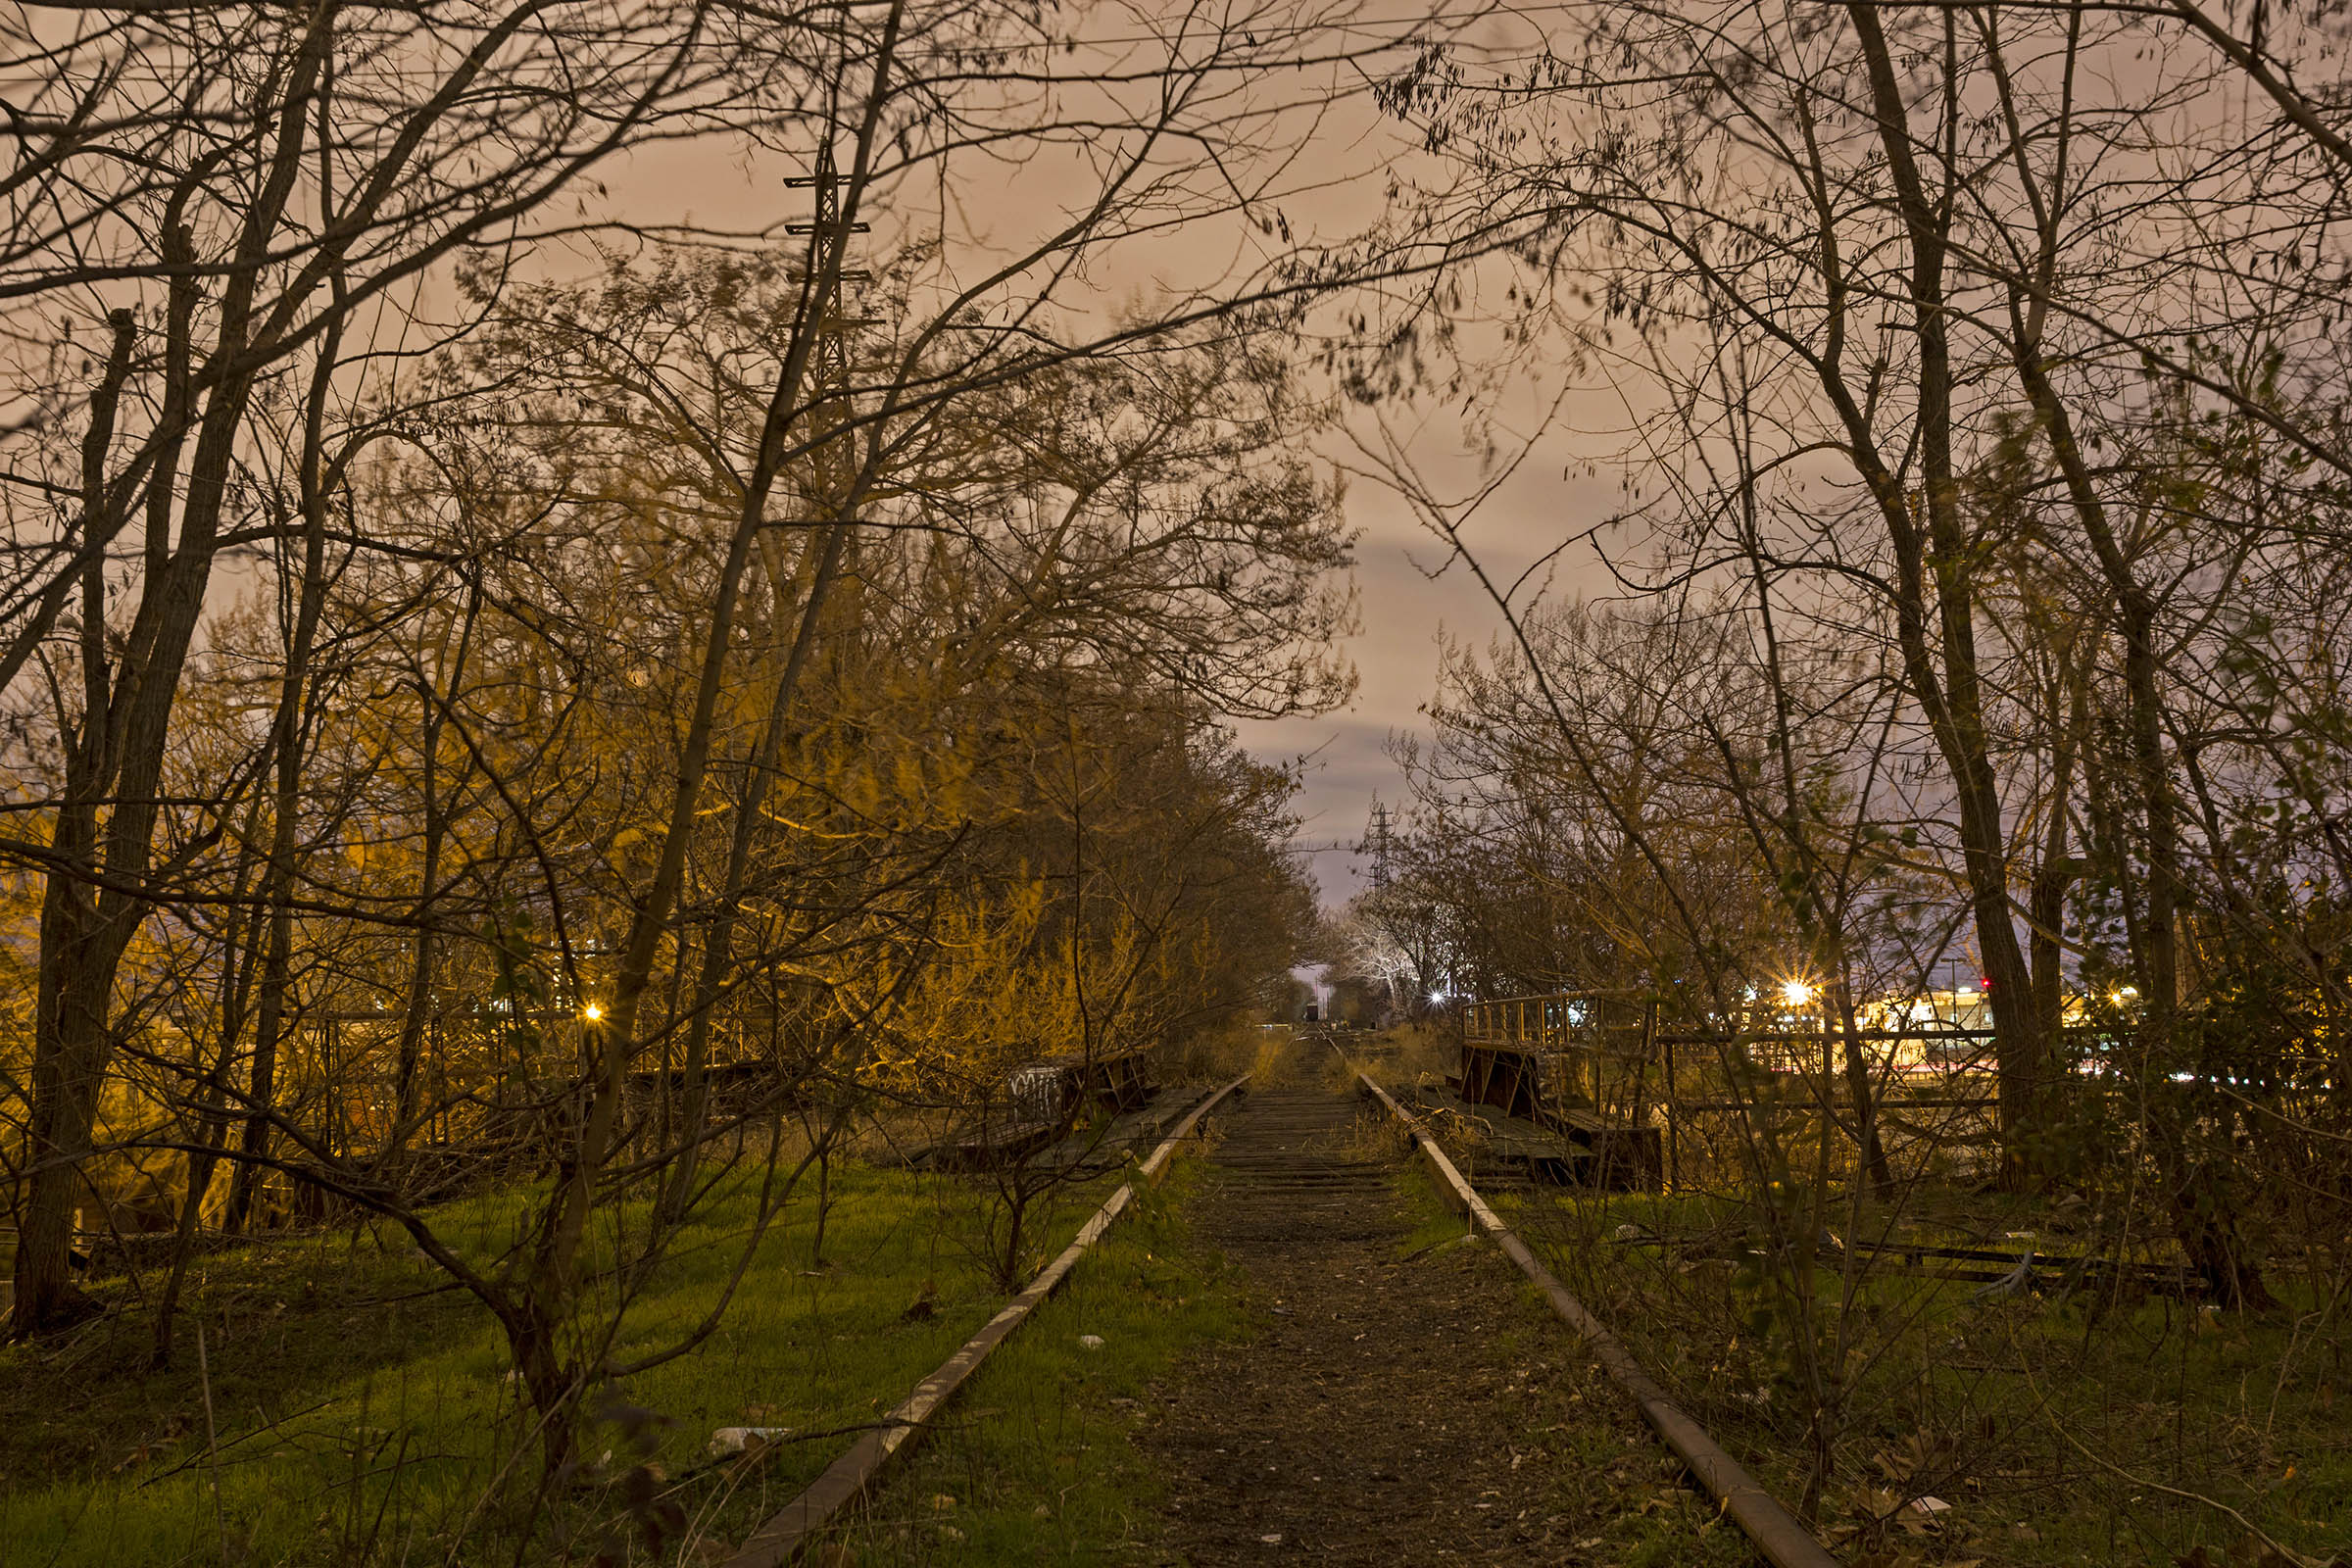 Abandoned railroad tracks, Philadelphia, PA, USA, 2016.